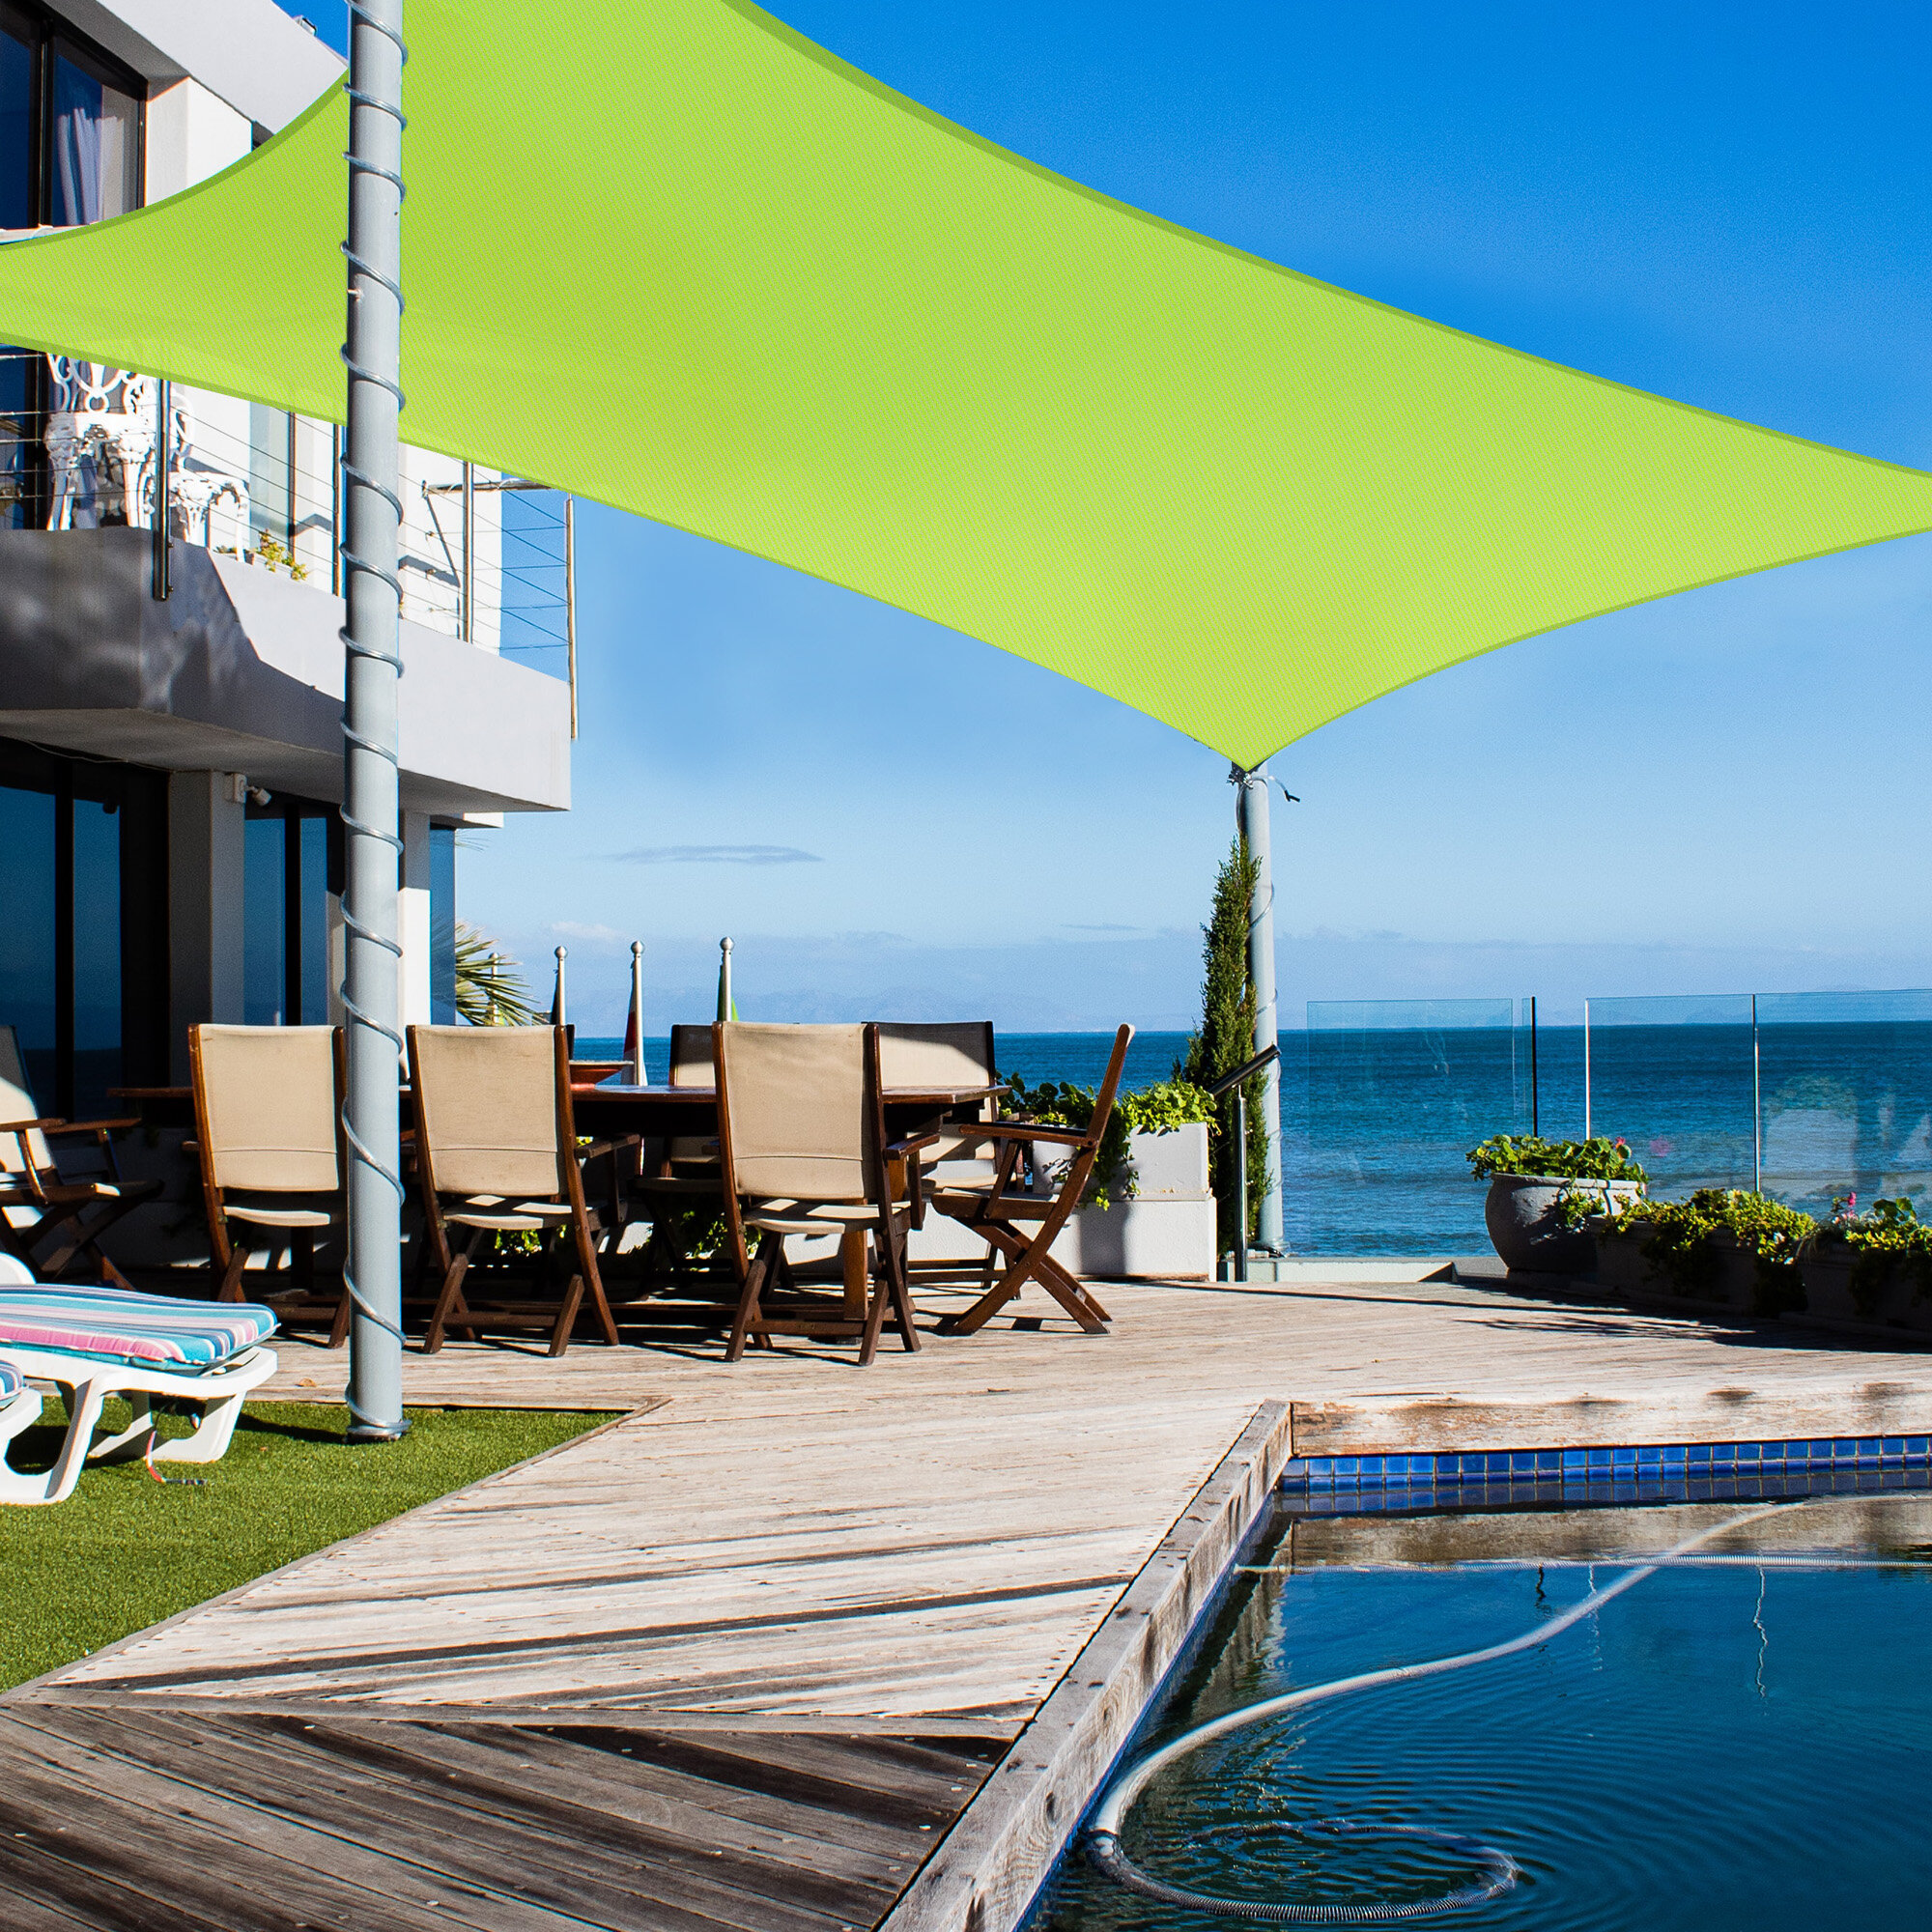 Yescom 19x13 ft 97% UV Block Rectangle Sun Shade Sail Canopy Outdoor Patio Pool Yard, Green